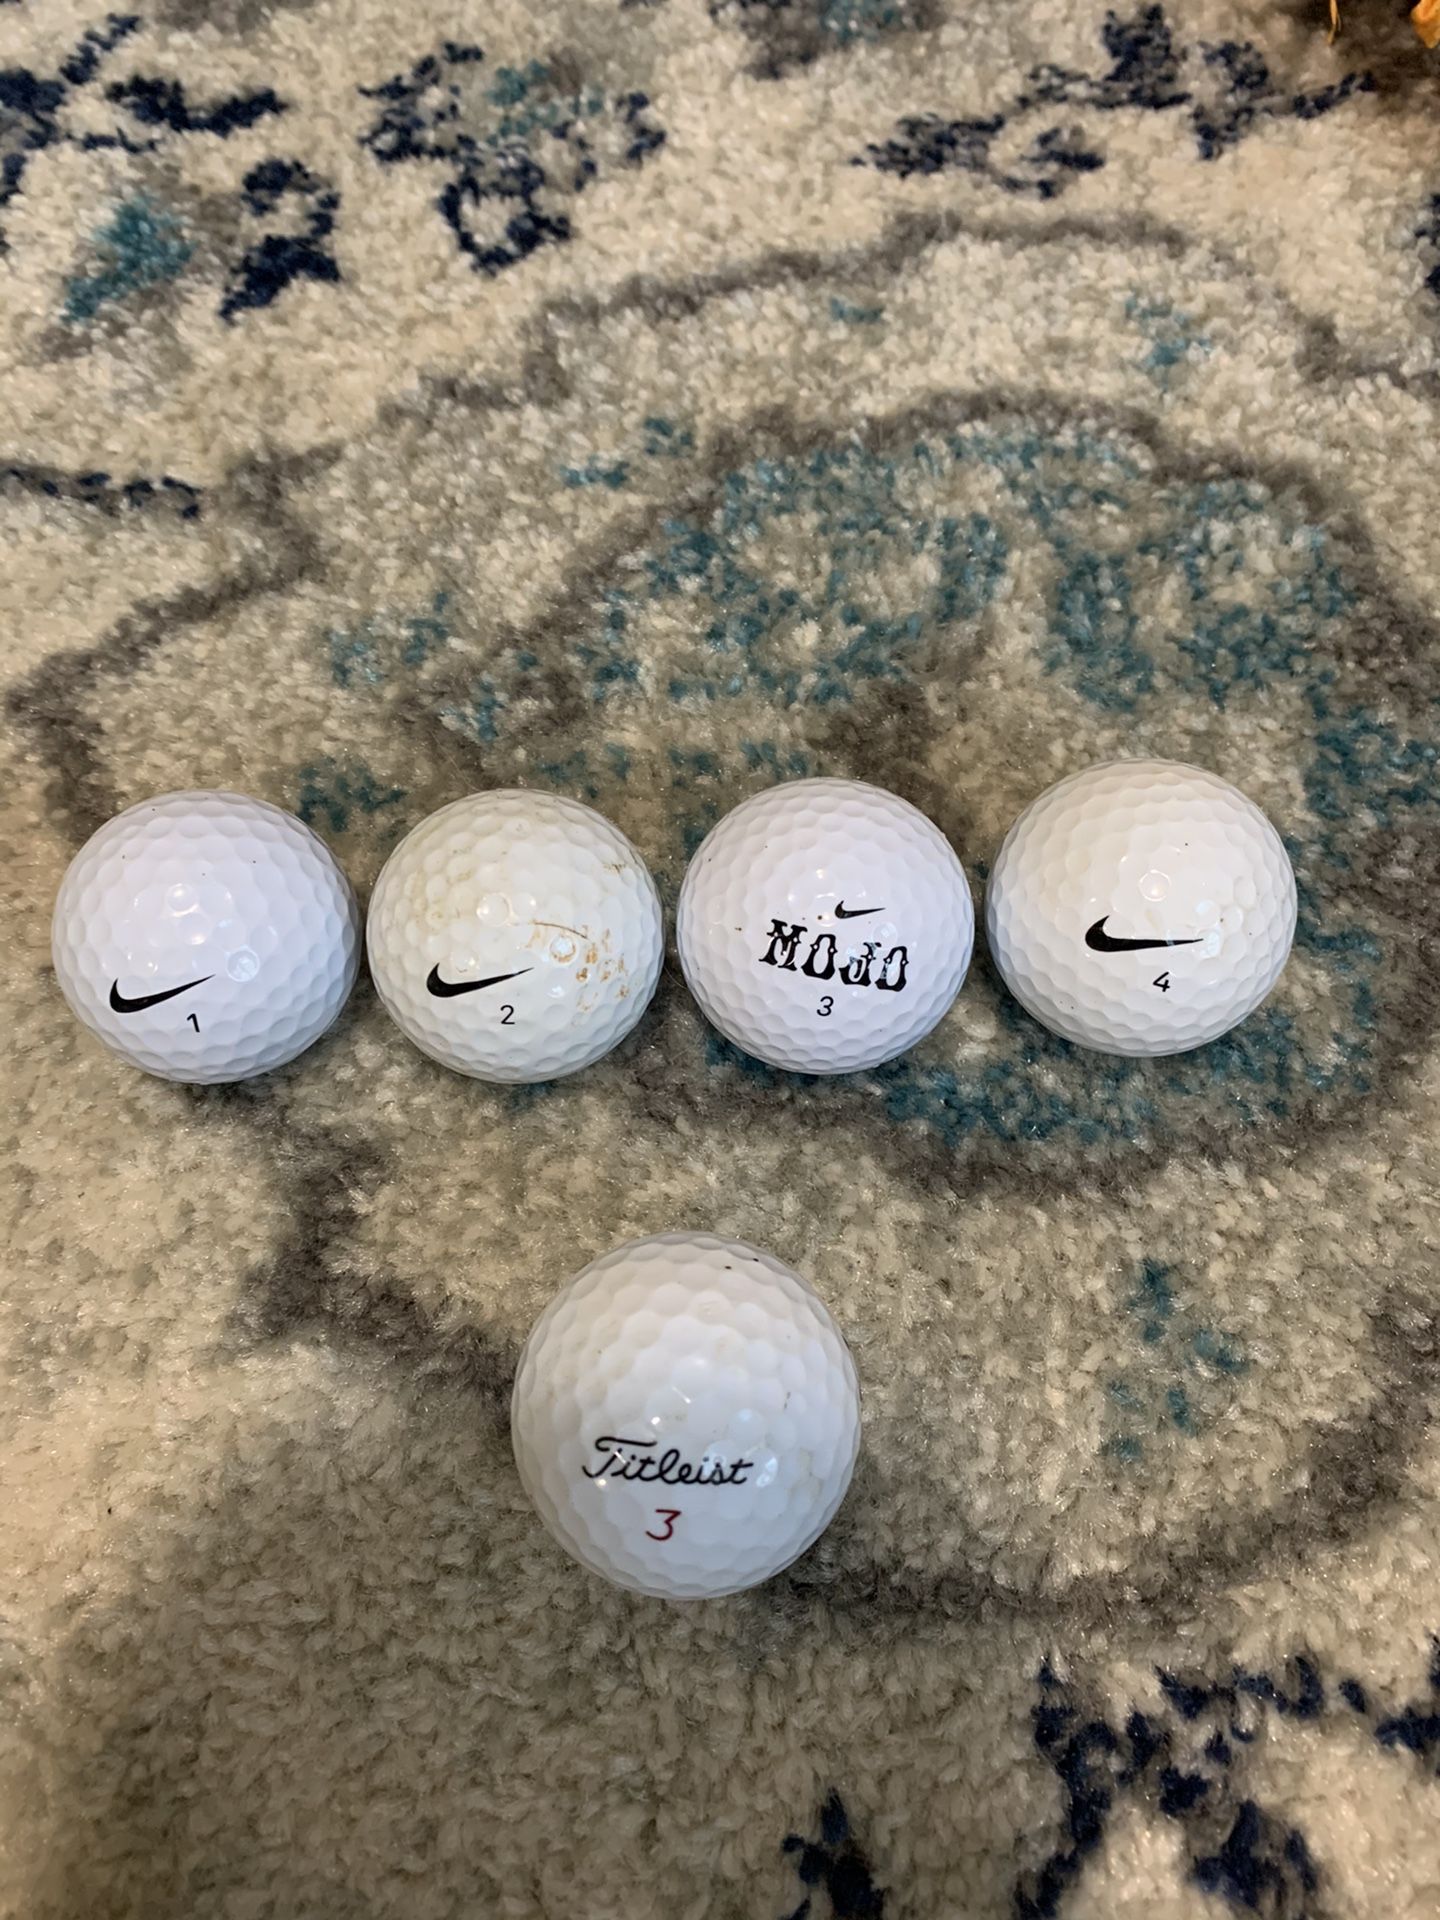 Nike and titleist golf balls